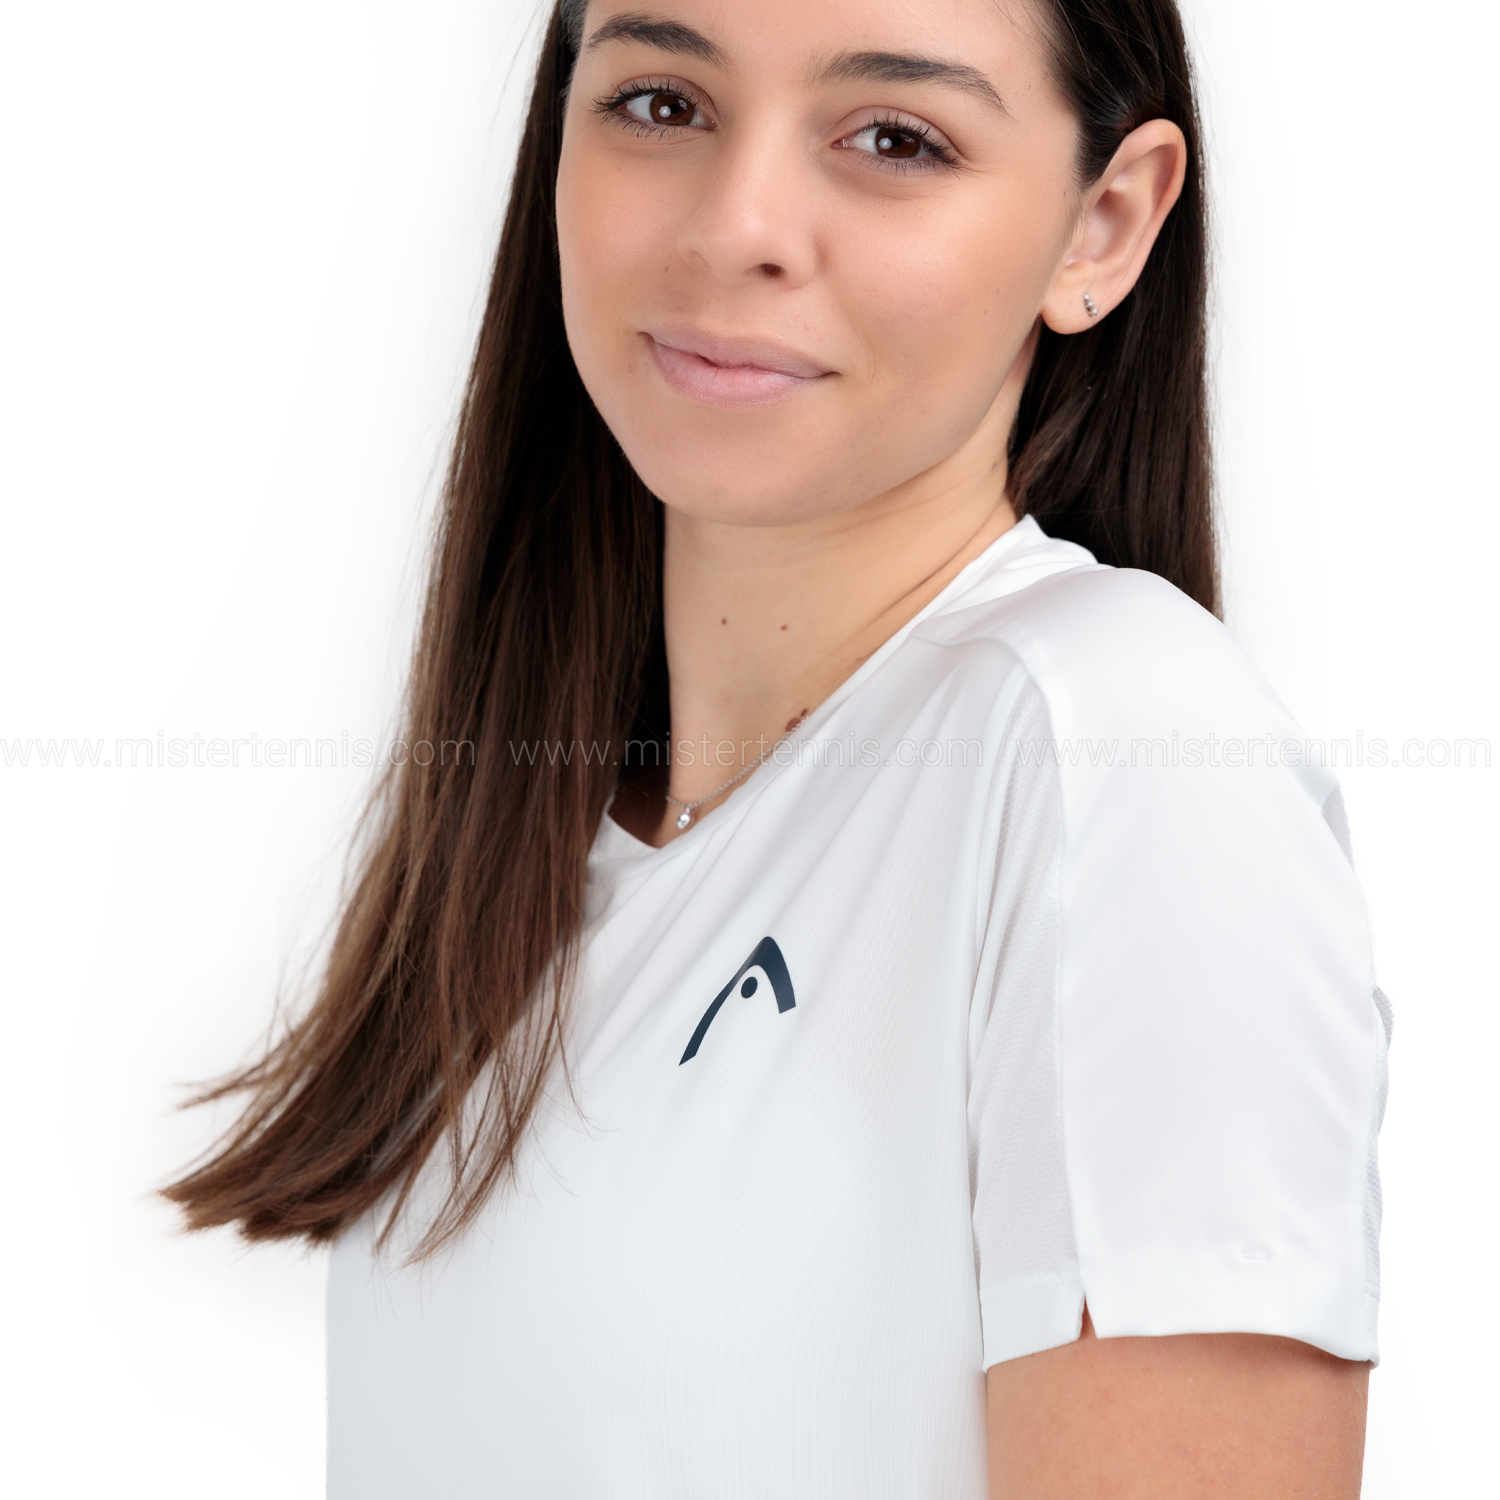 Head Play Tech Pro T-Shirt - White